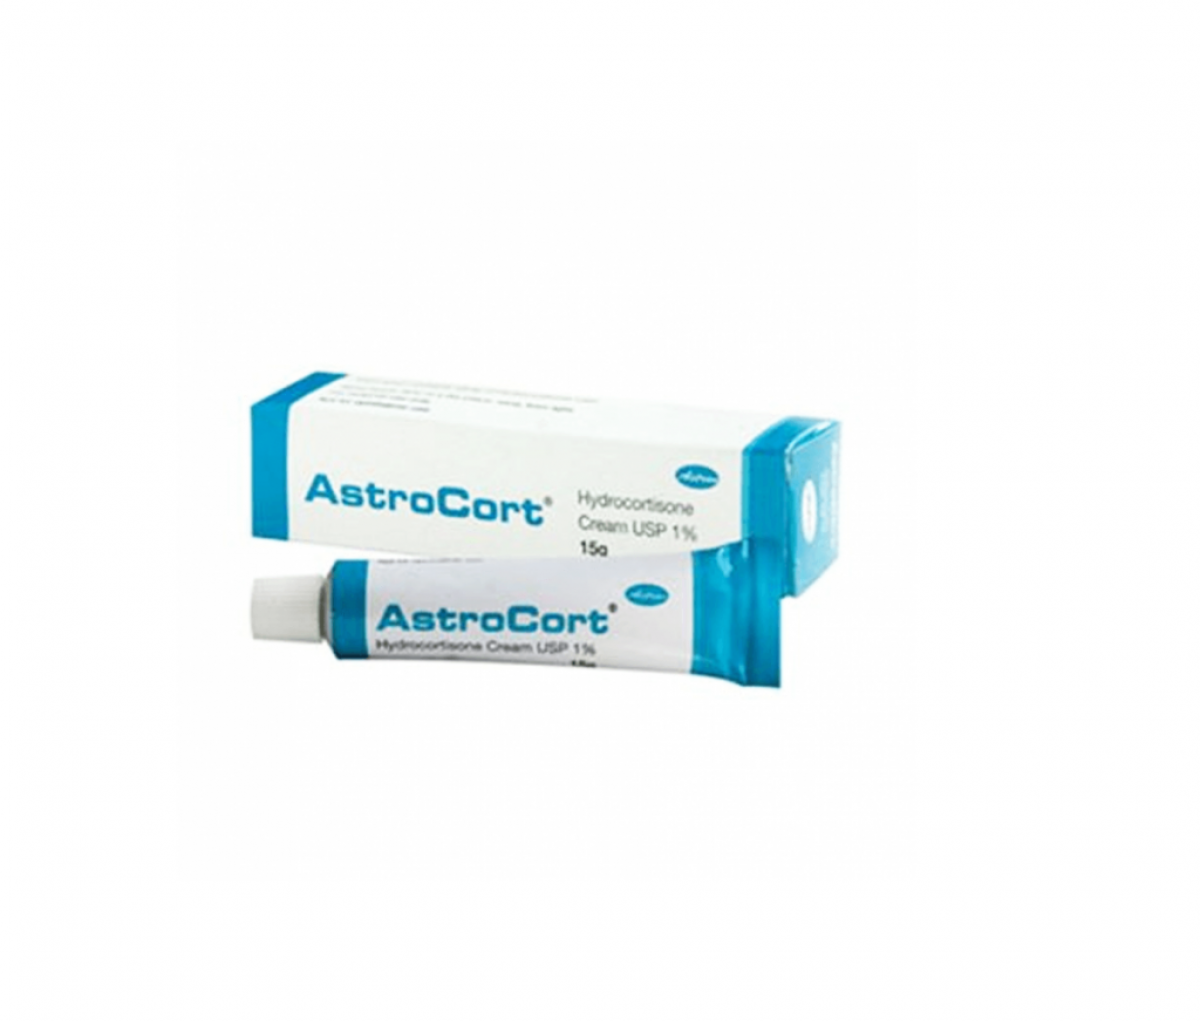 Astrocort 1% Cream 15g